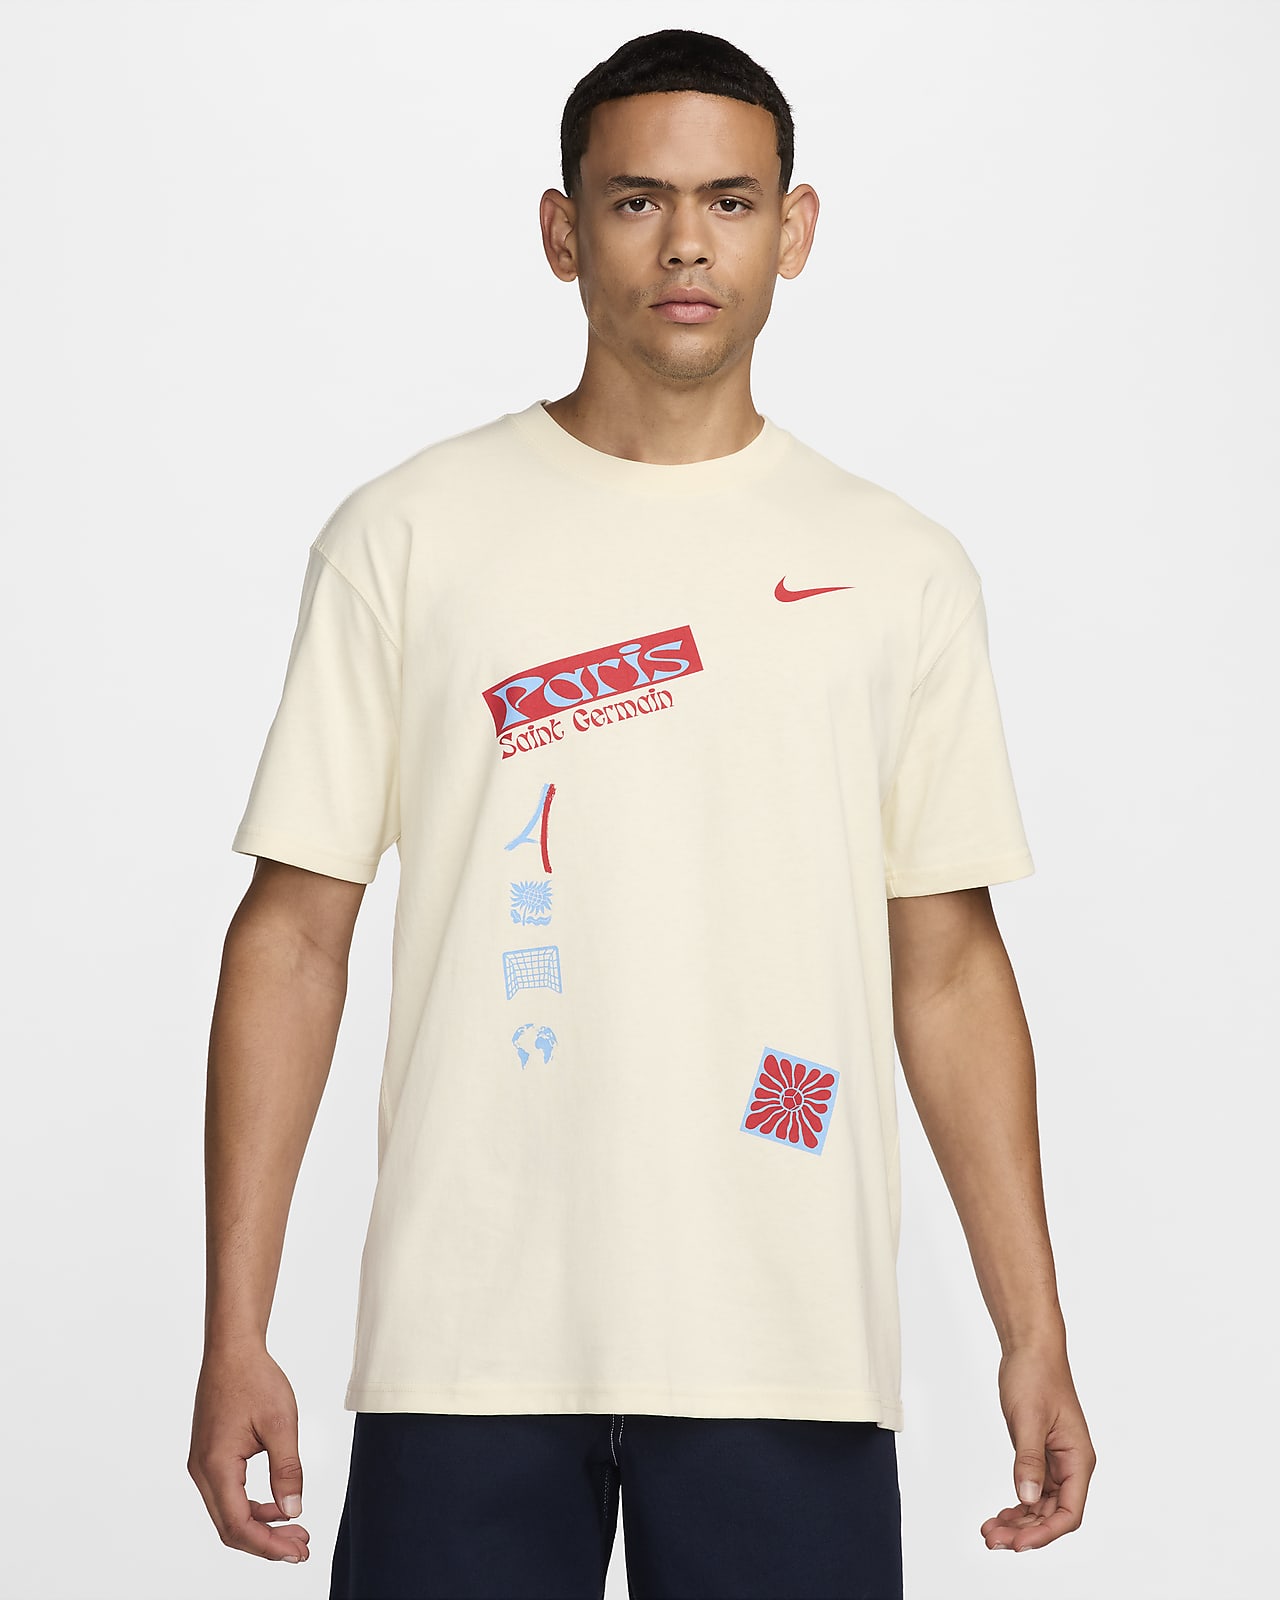 Paris Saint-Germain Men's Nike Football Max90 T-Shirt